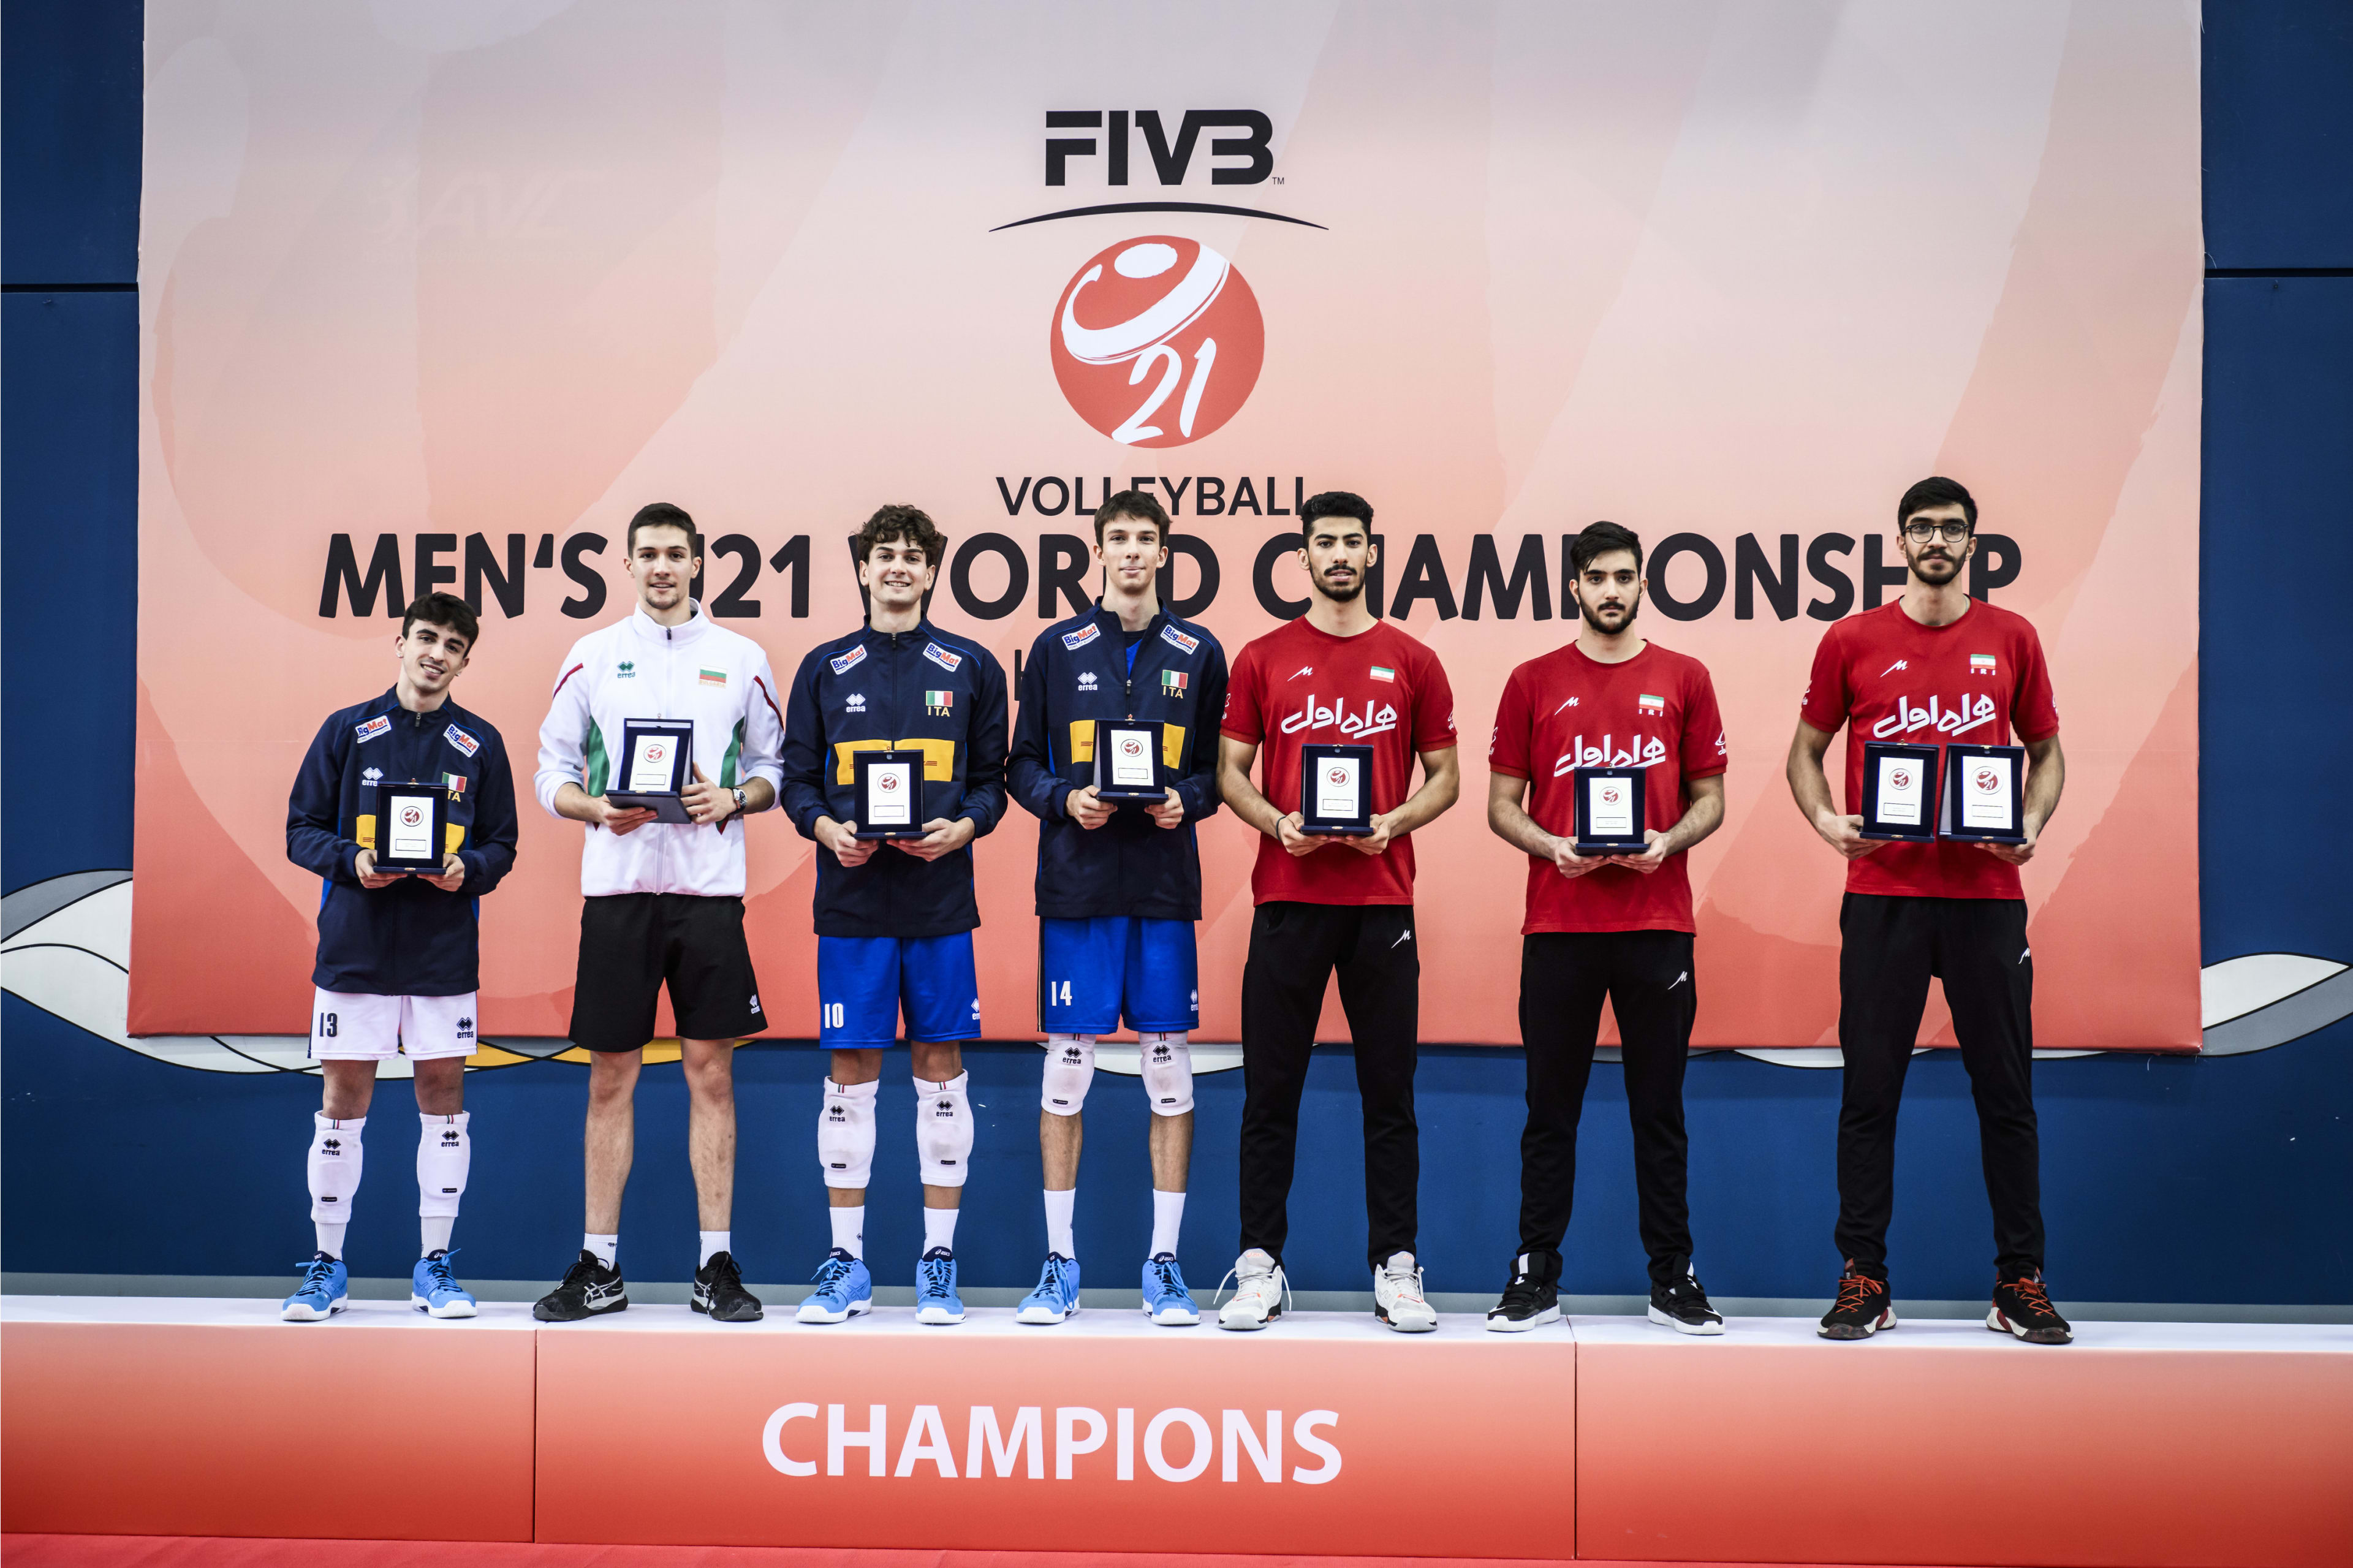 2023 FIVB Volleyball Girls' U19 World Championship